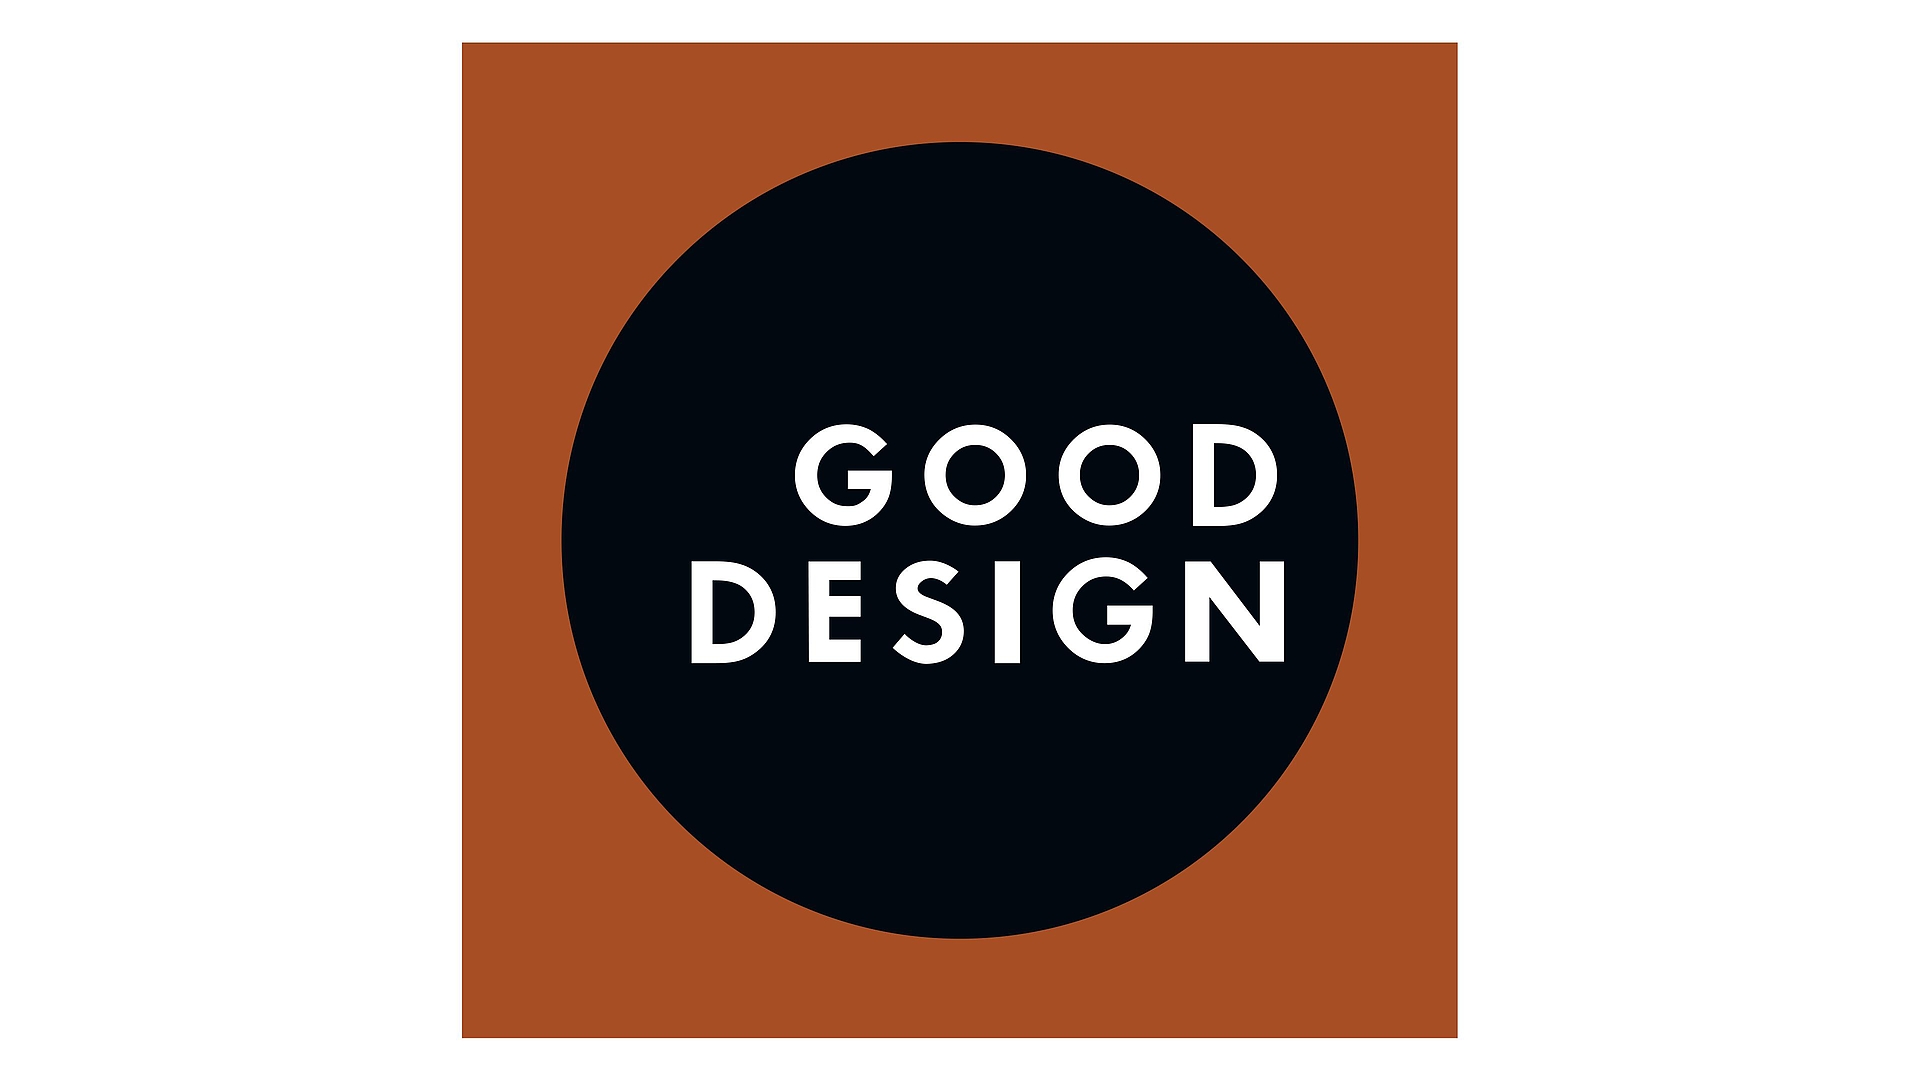 Award_Good_Design_thumb.jpg